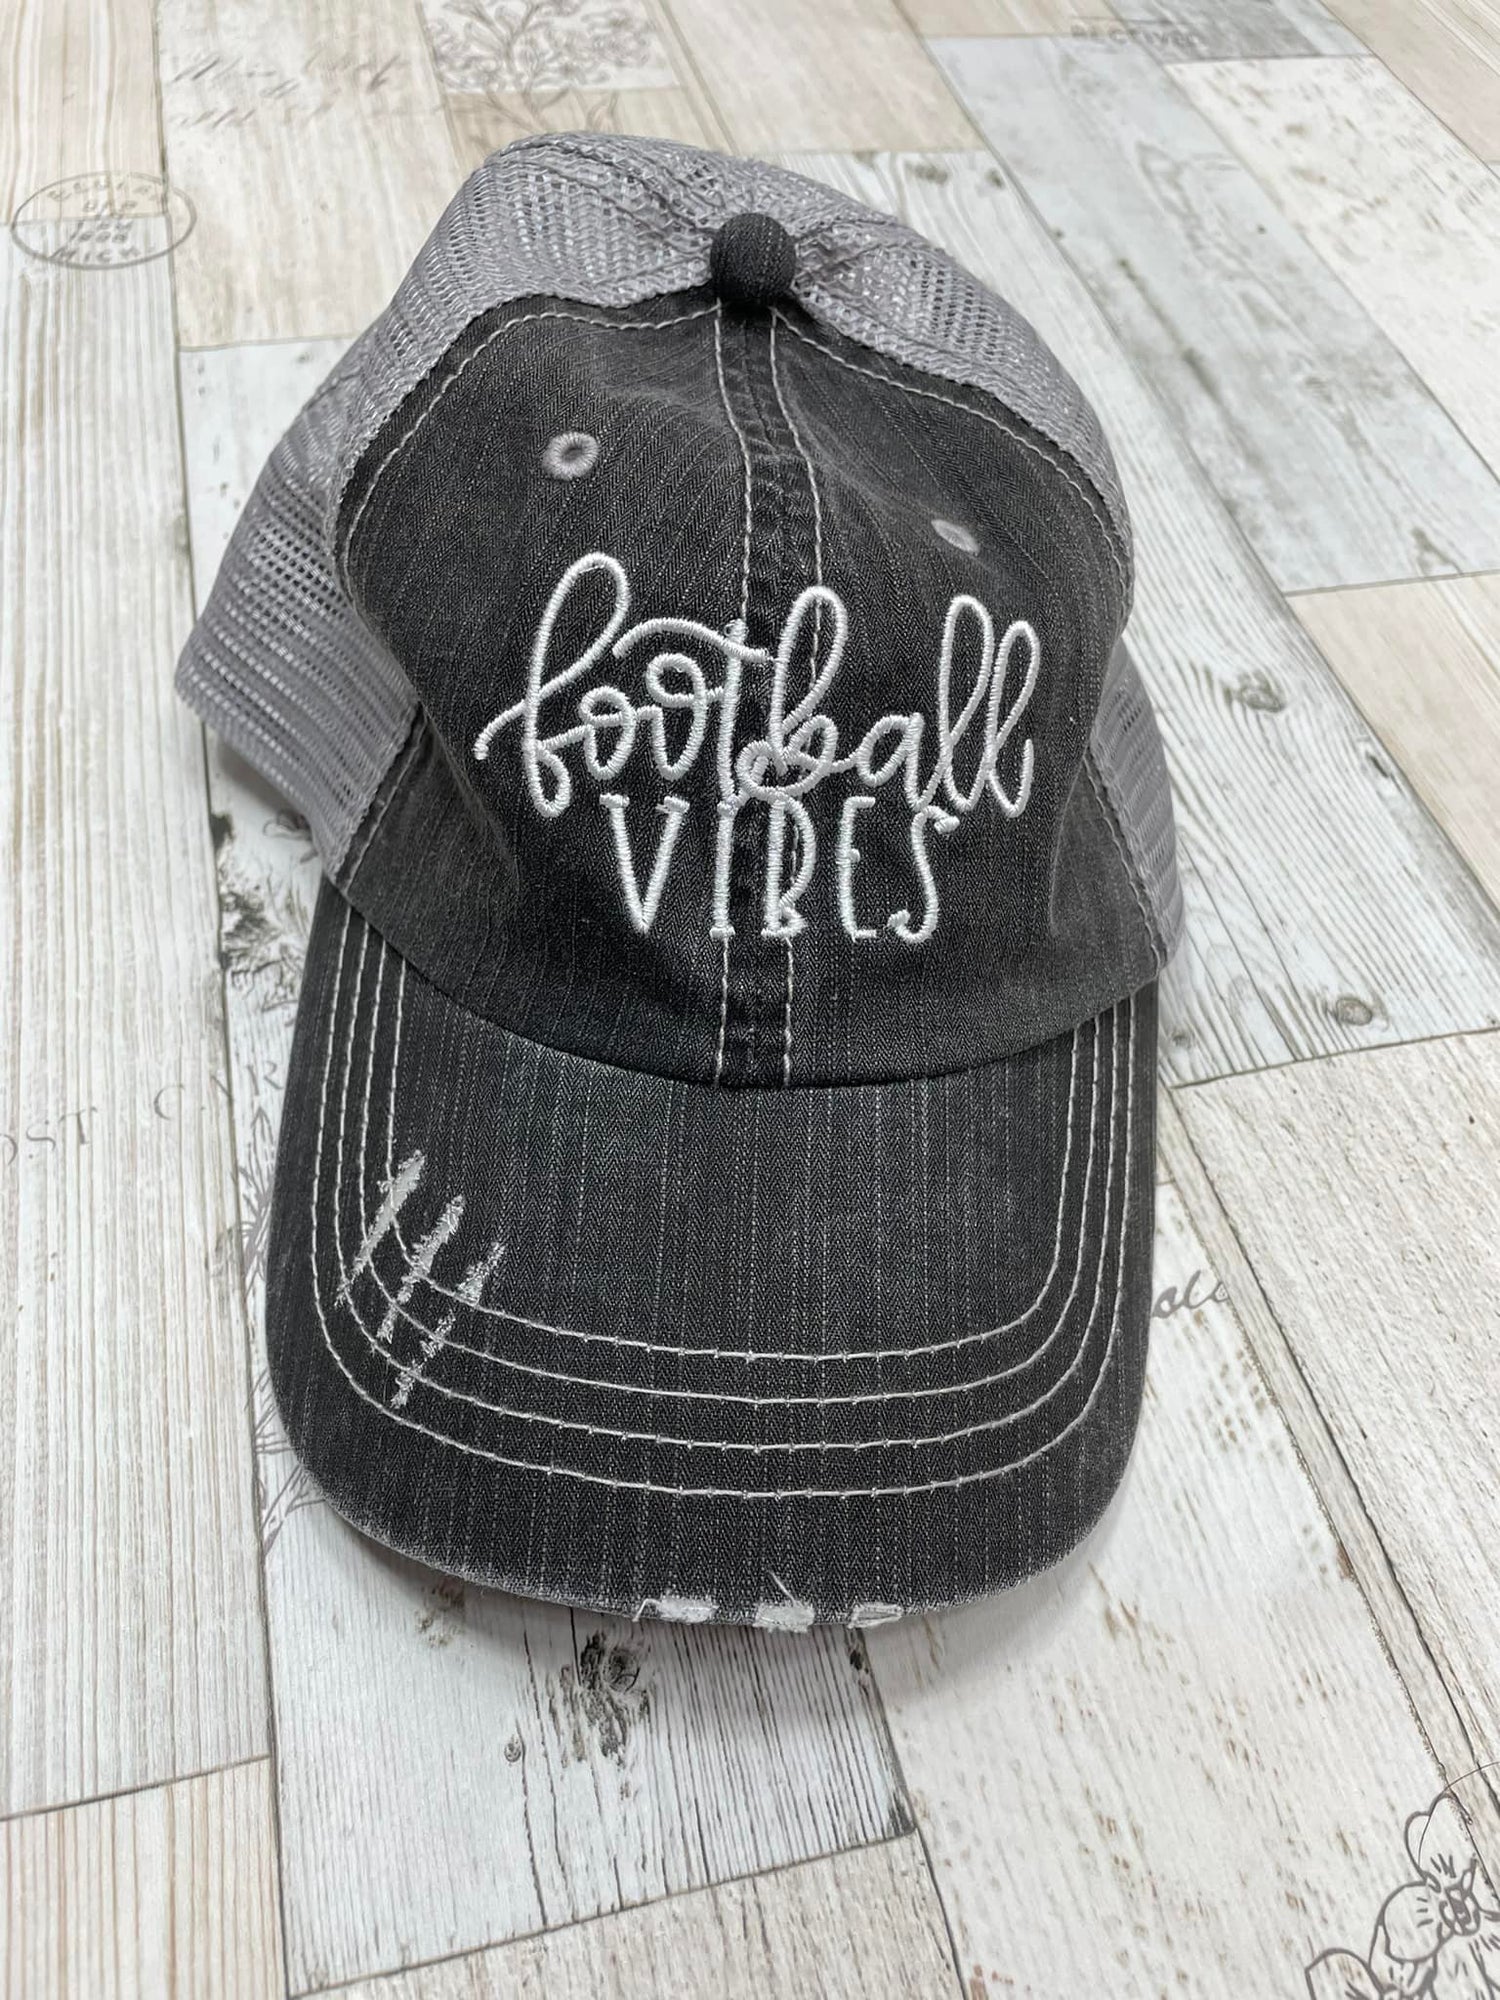 Football Vibes Trucker Hat - Sassy Chick Clothing